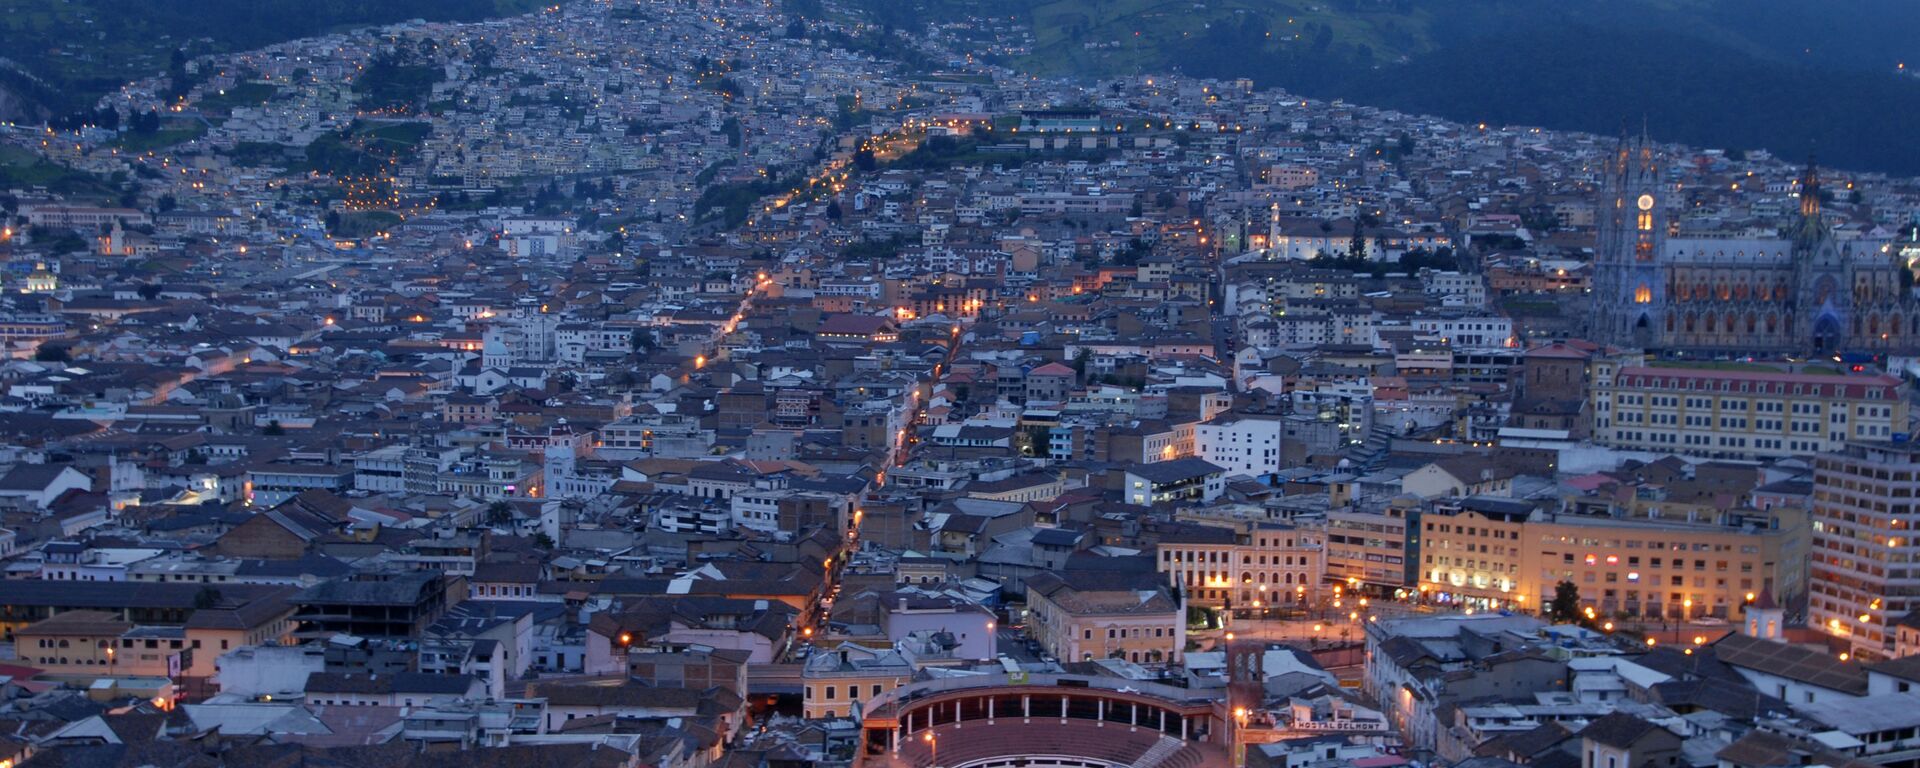 Quito, capital del Ecuador - Sputnik Mundo, 1920, 01.04.2021